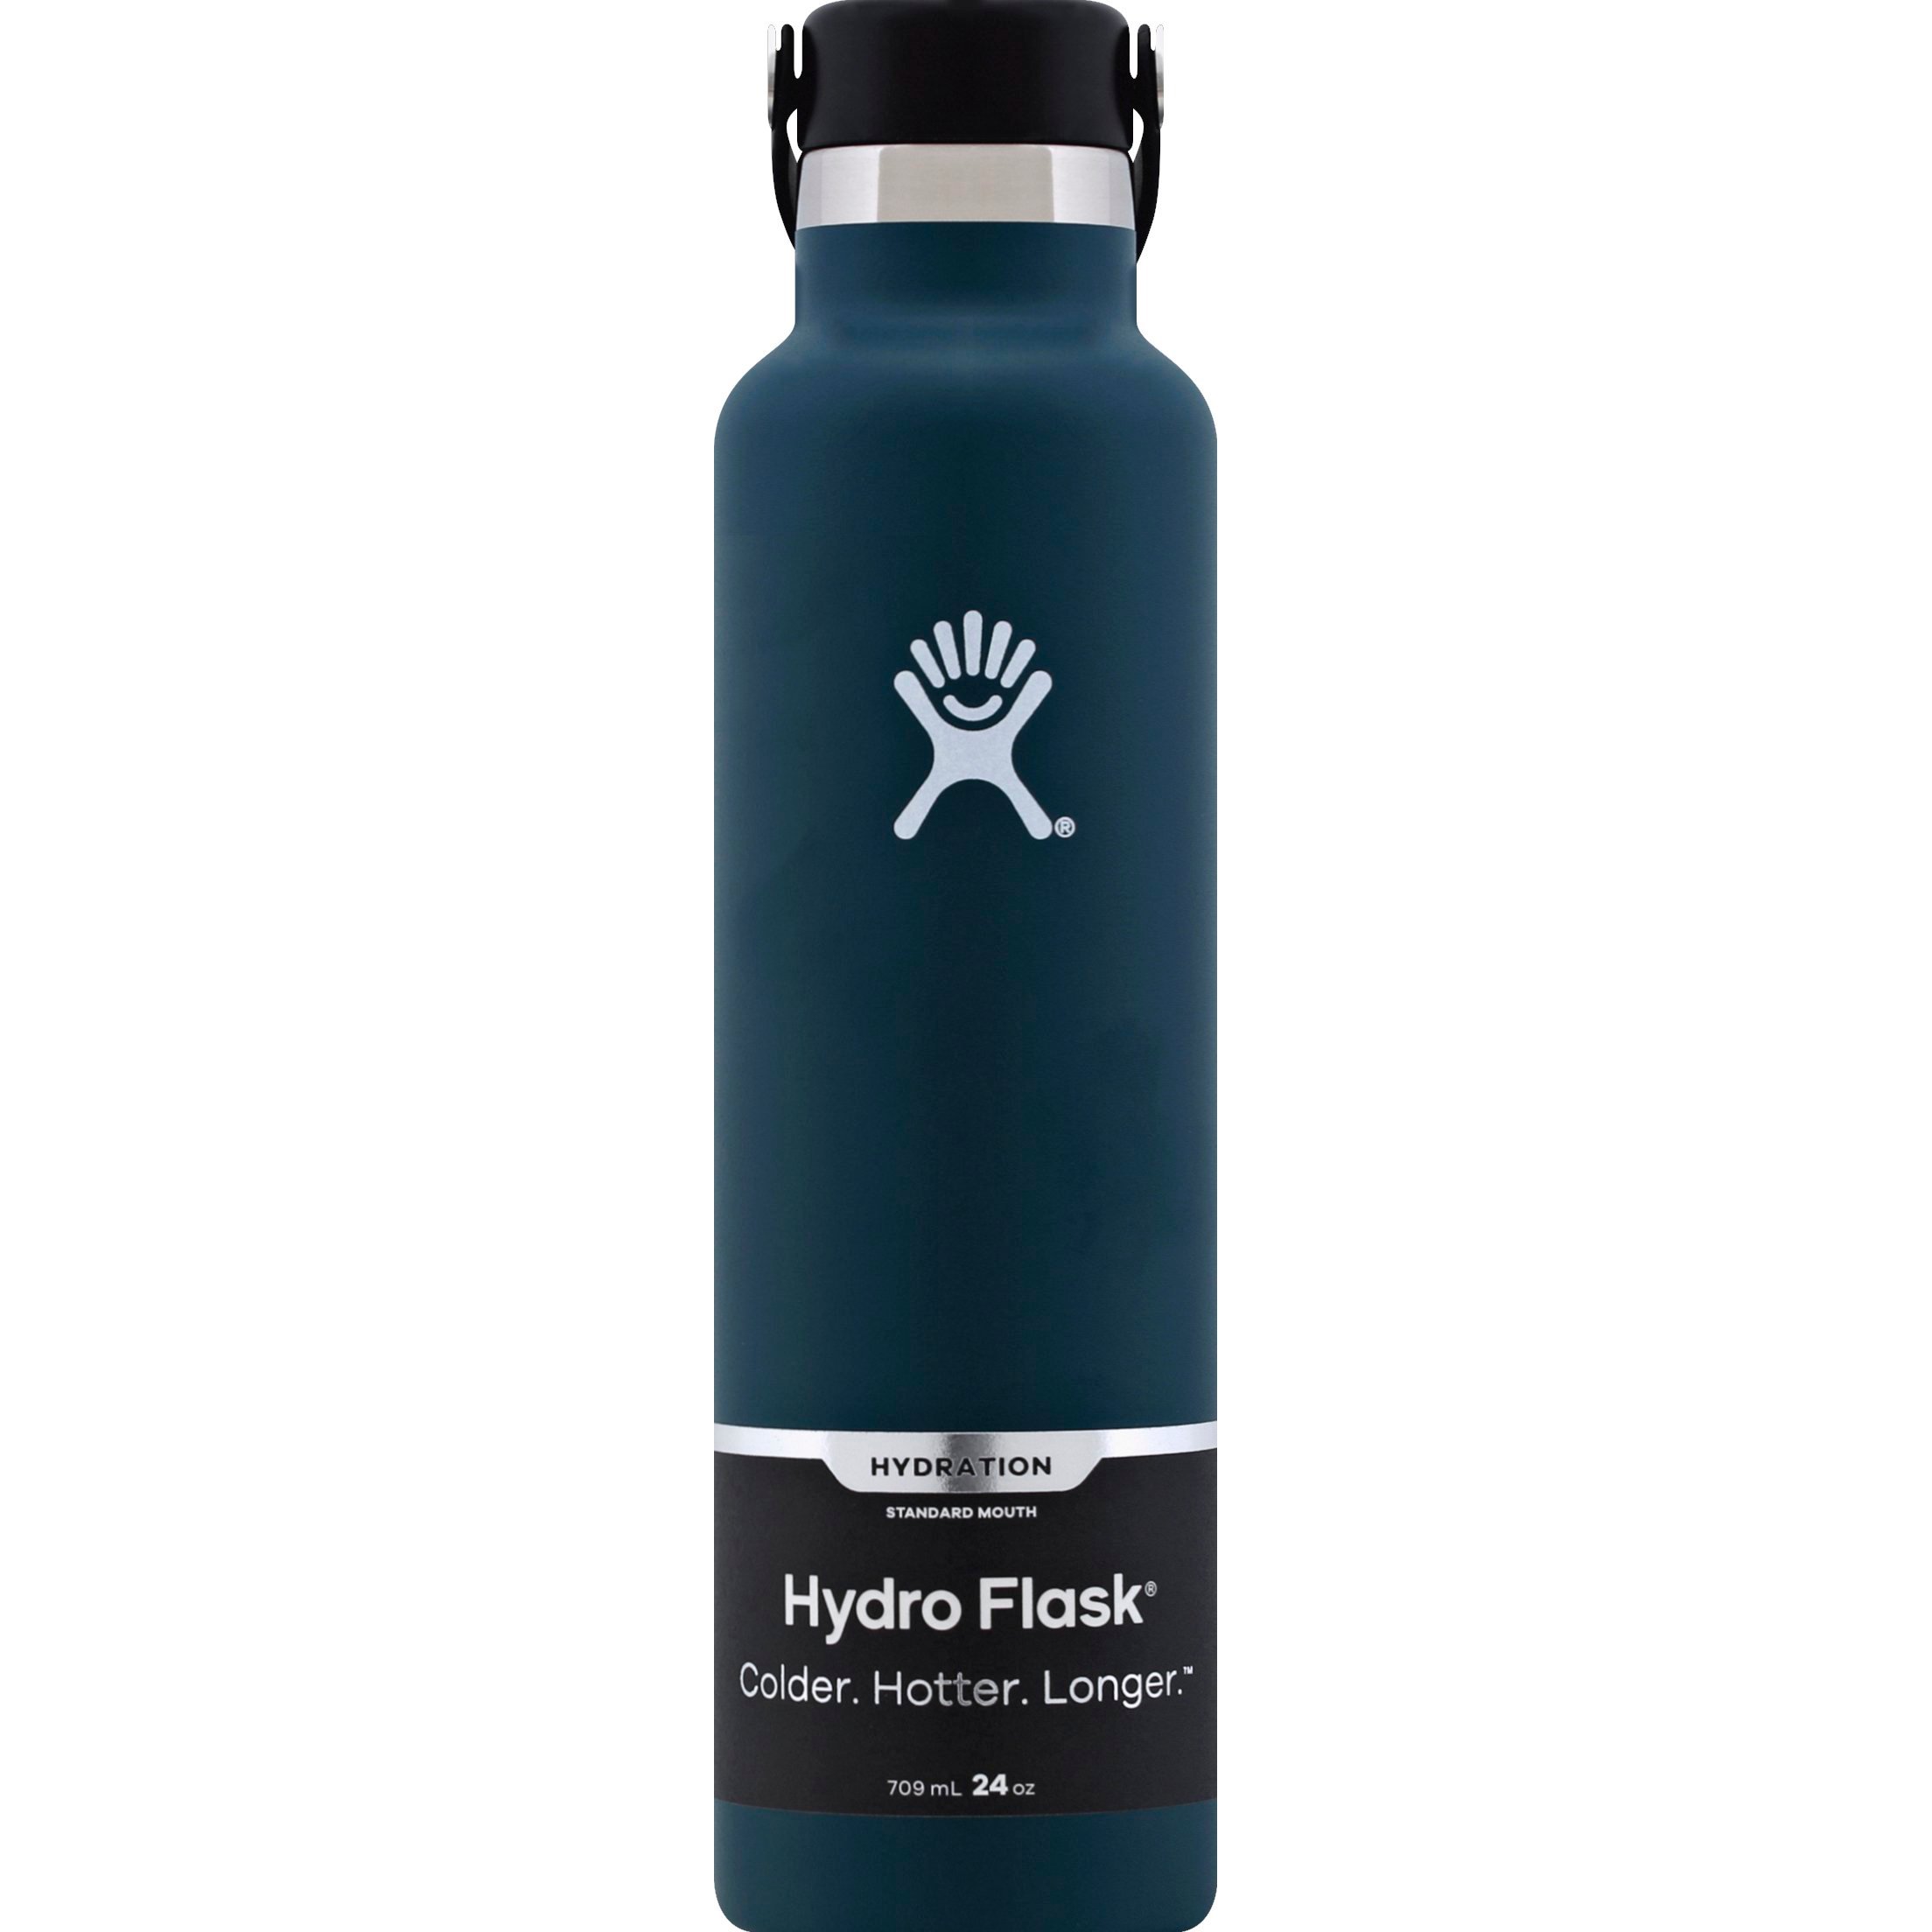 hydro flask shop